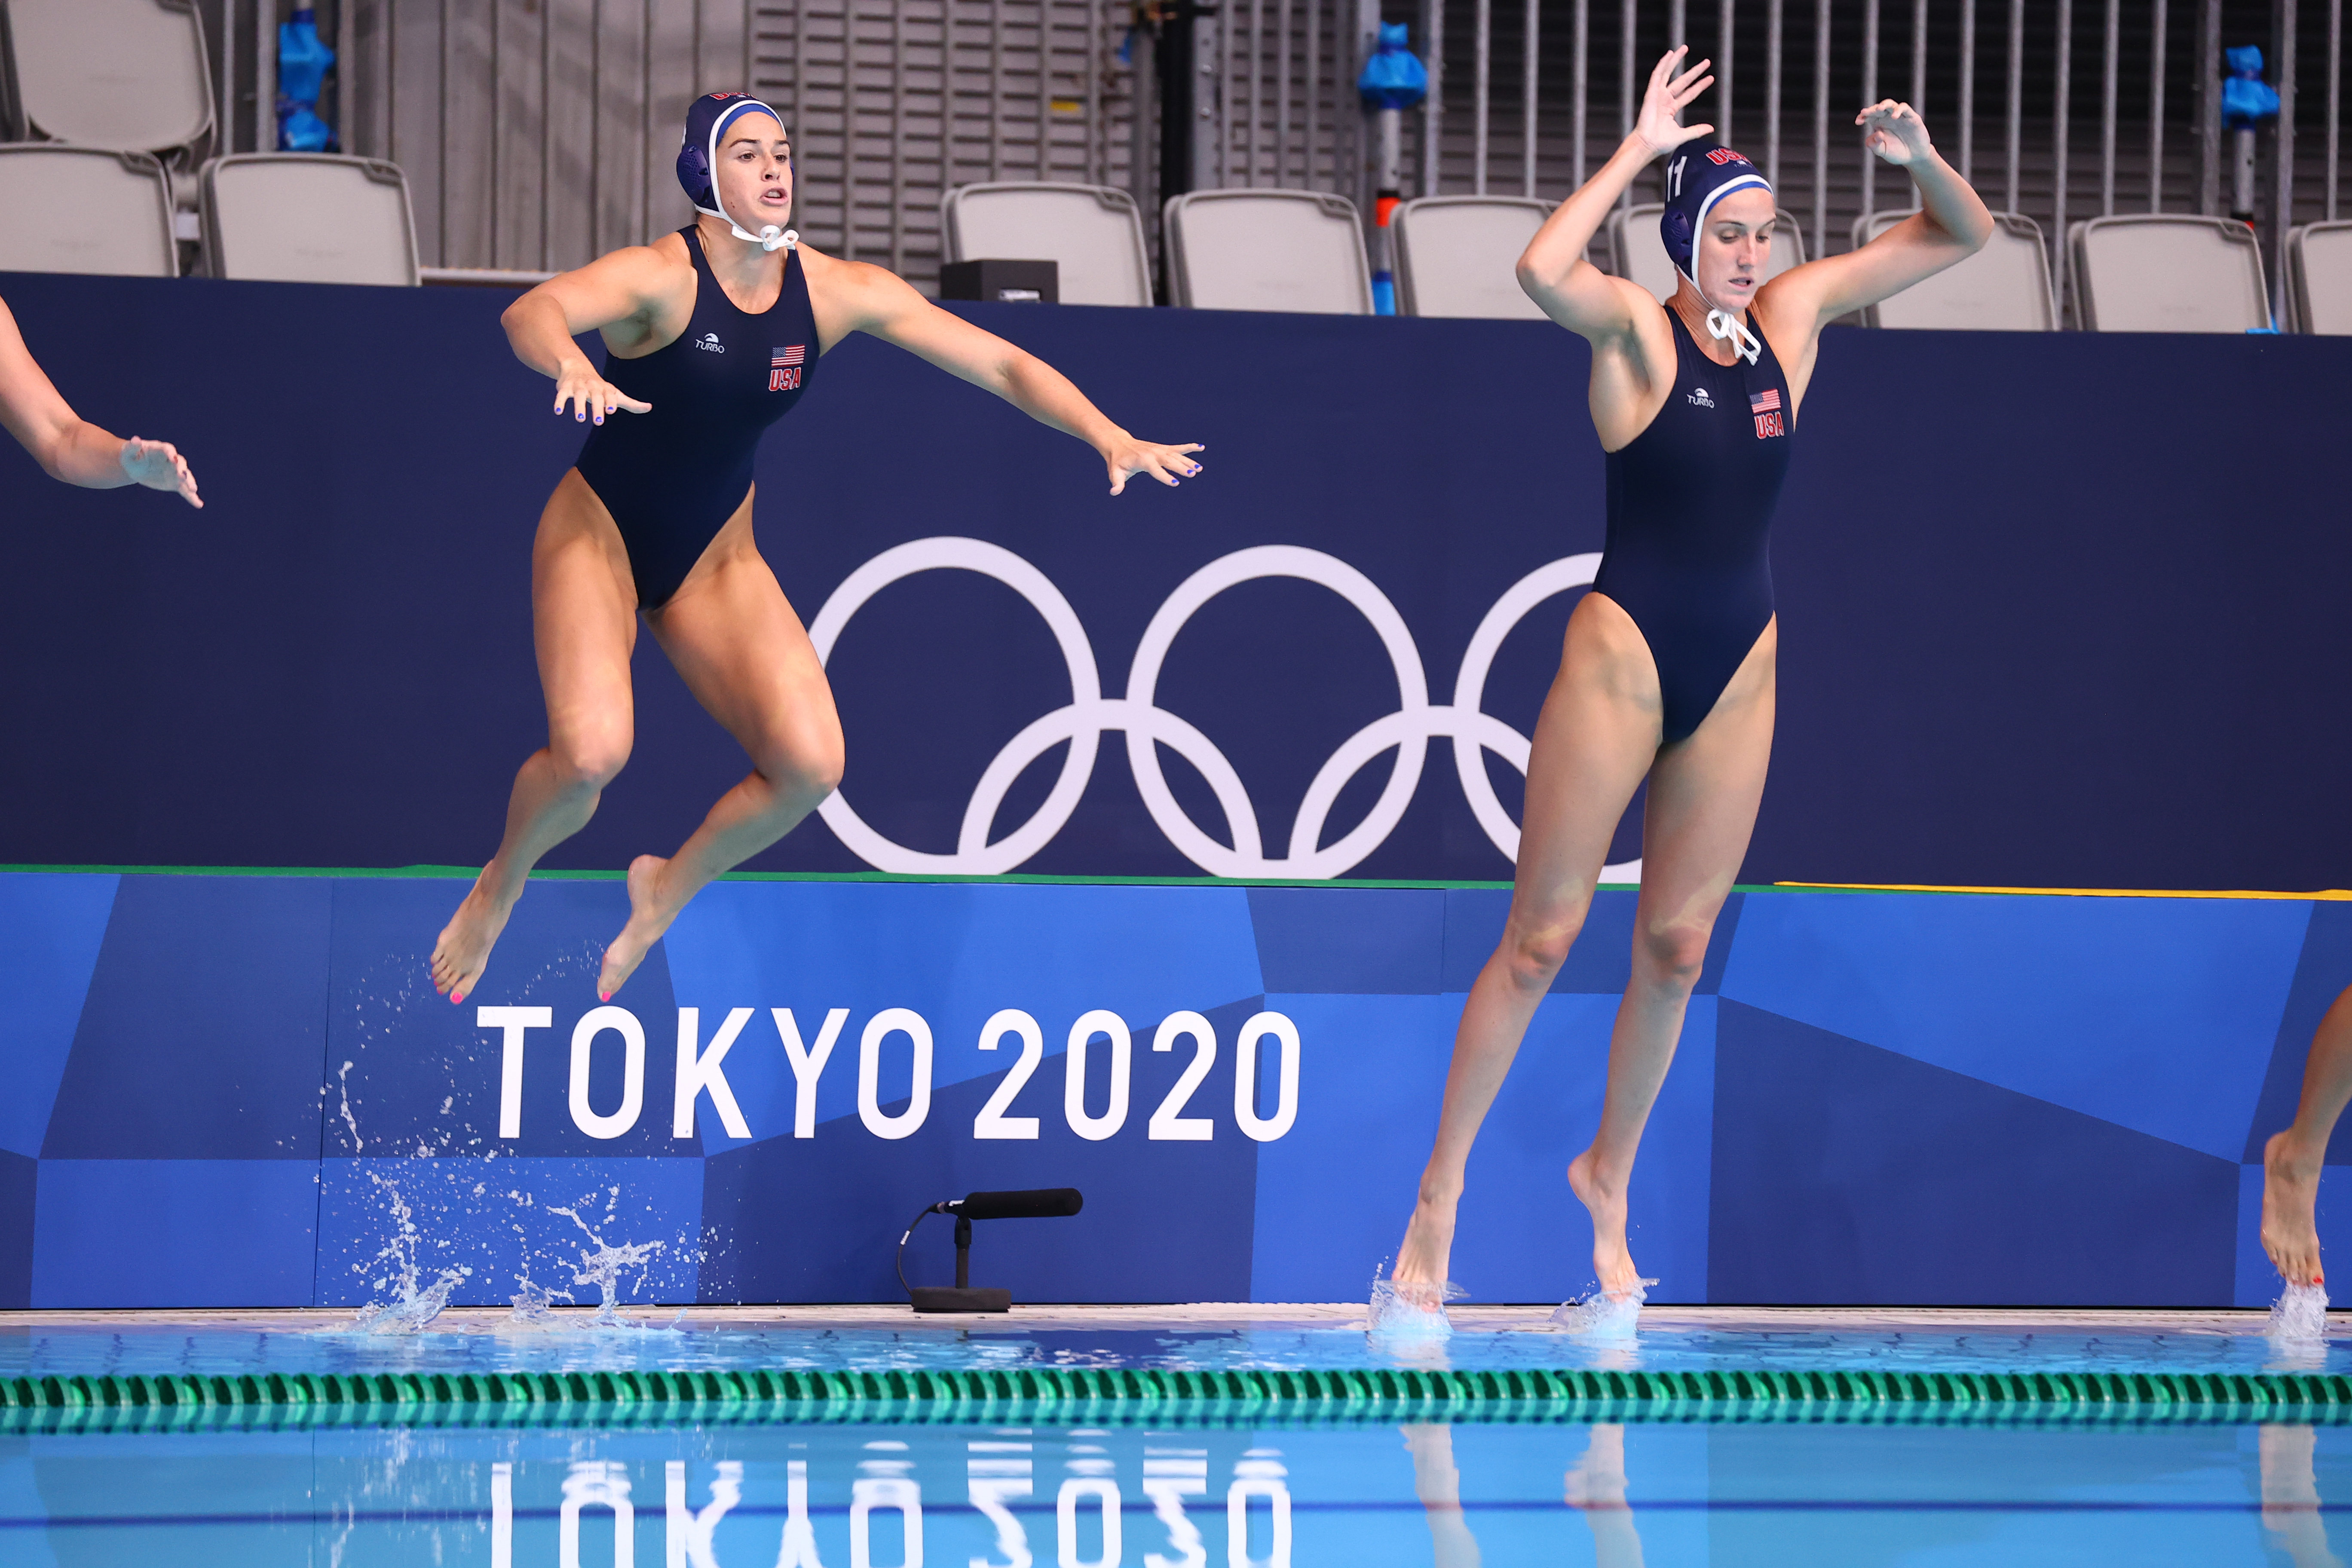 U.S. Women's Water Polo Team Makes Olympic Final Despite Bonehead